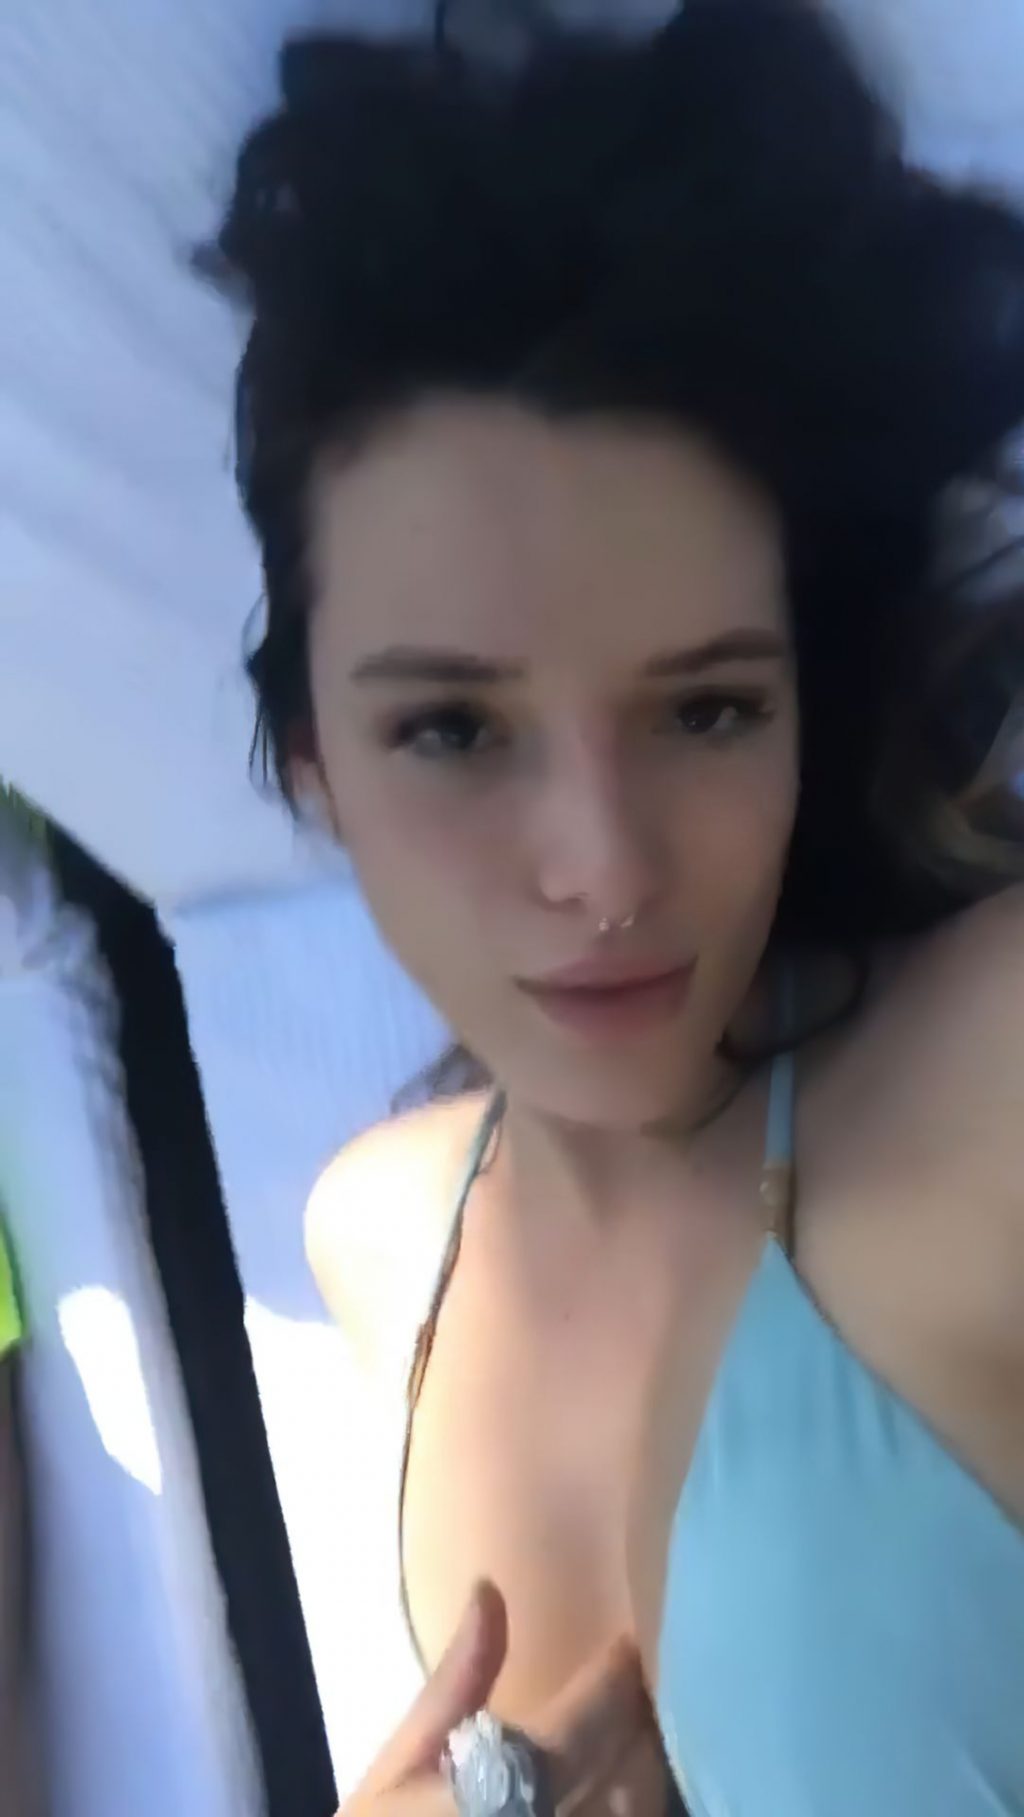 uncensored sexy pussy photos nude leaked Instagram celebrity bikini Bella Thorne 